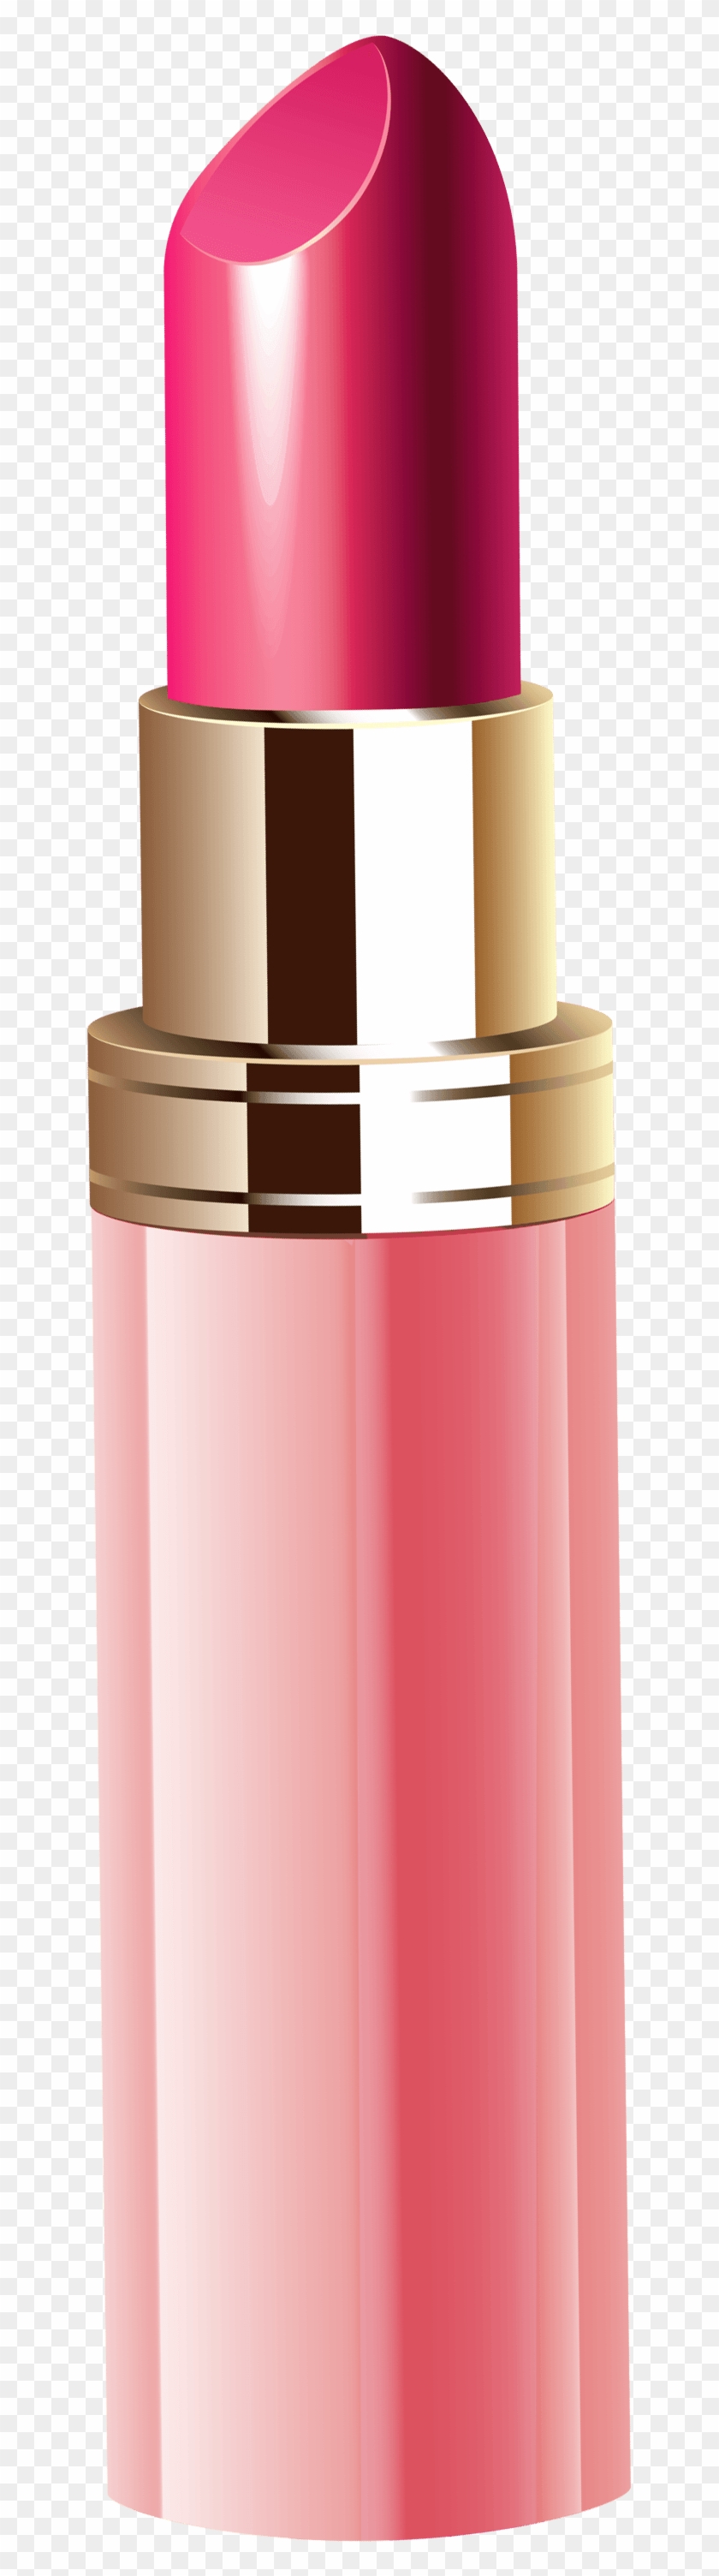 Pink Lipstick Clipart Image - Pink Lipstick Png #955854